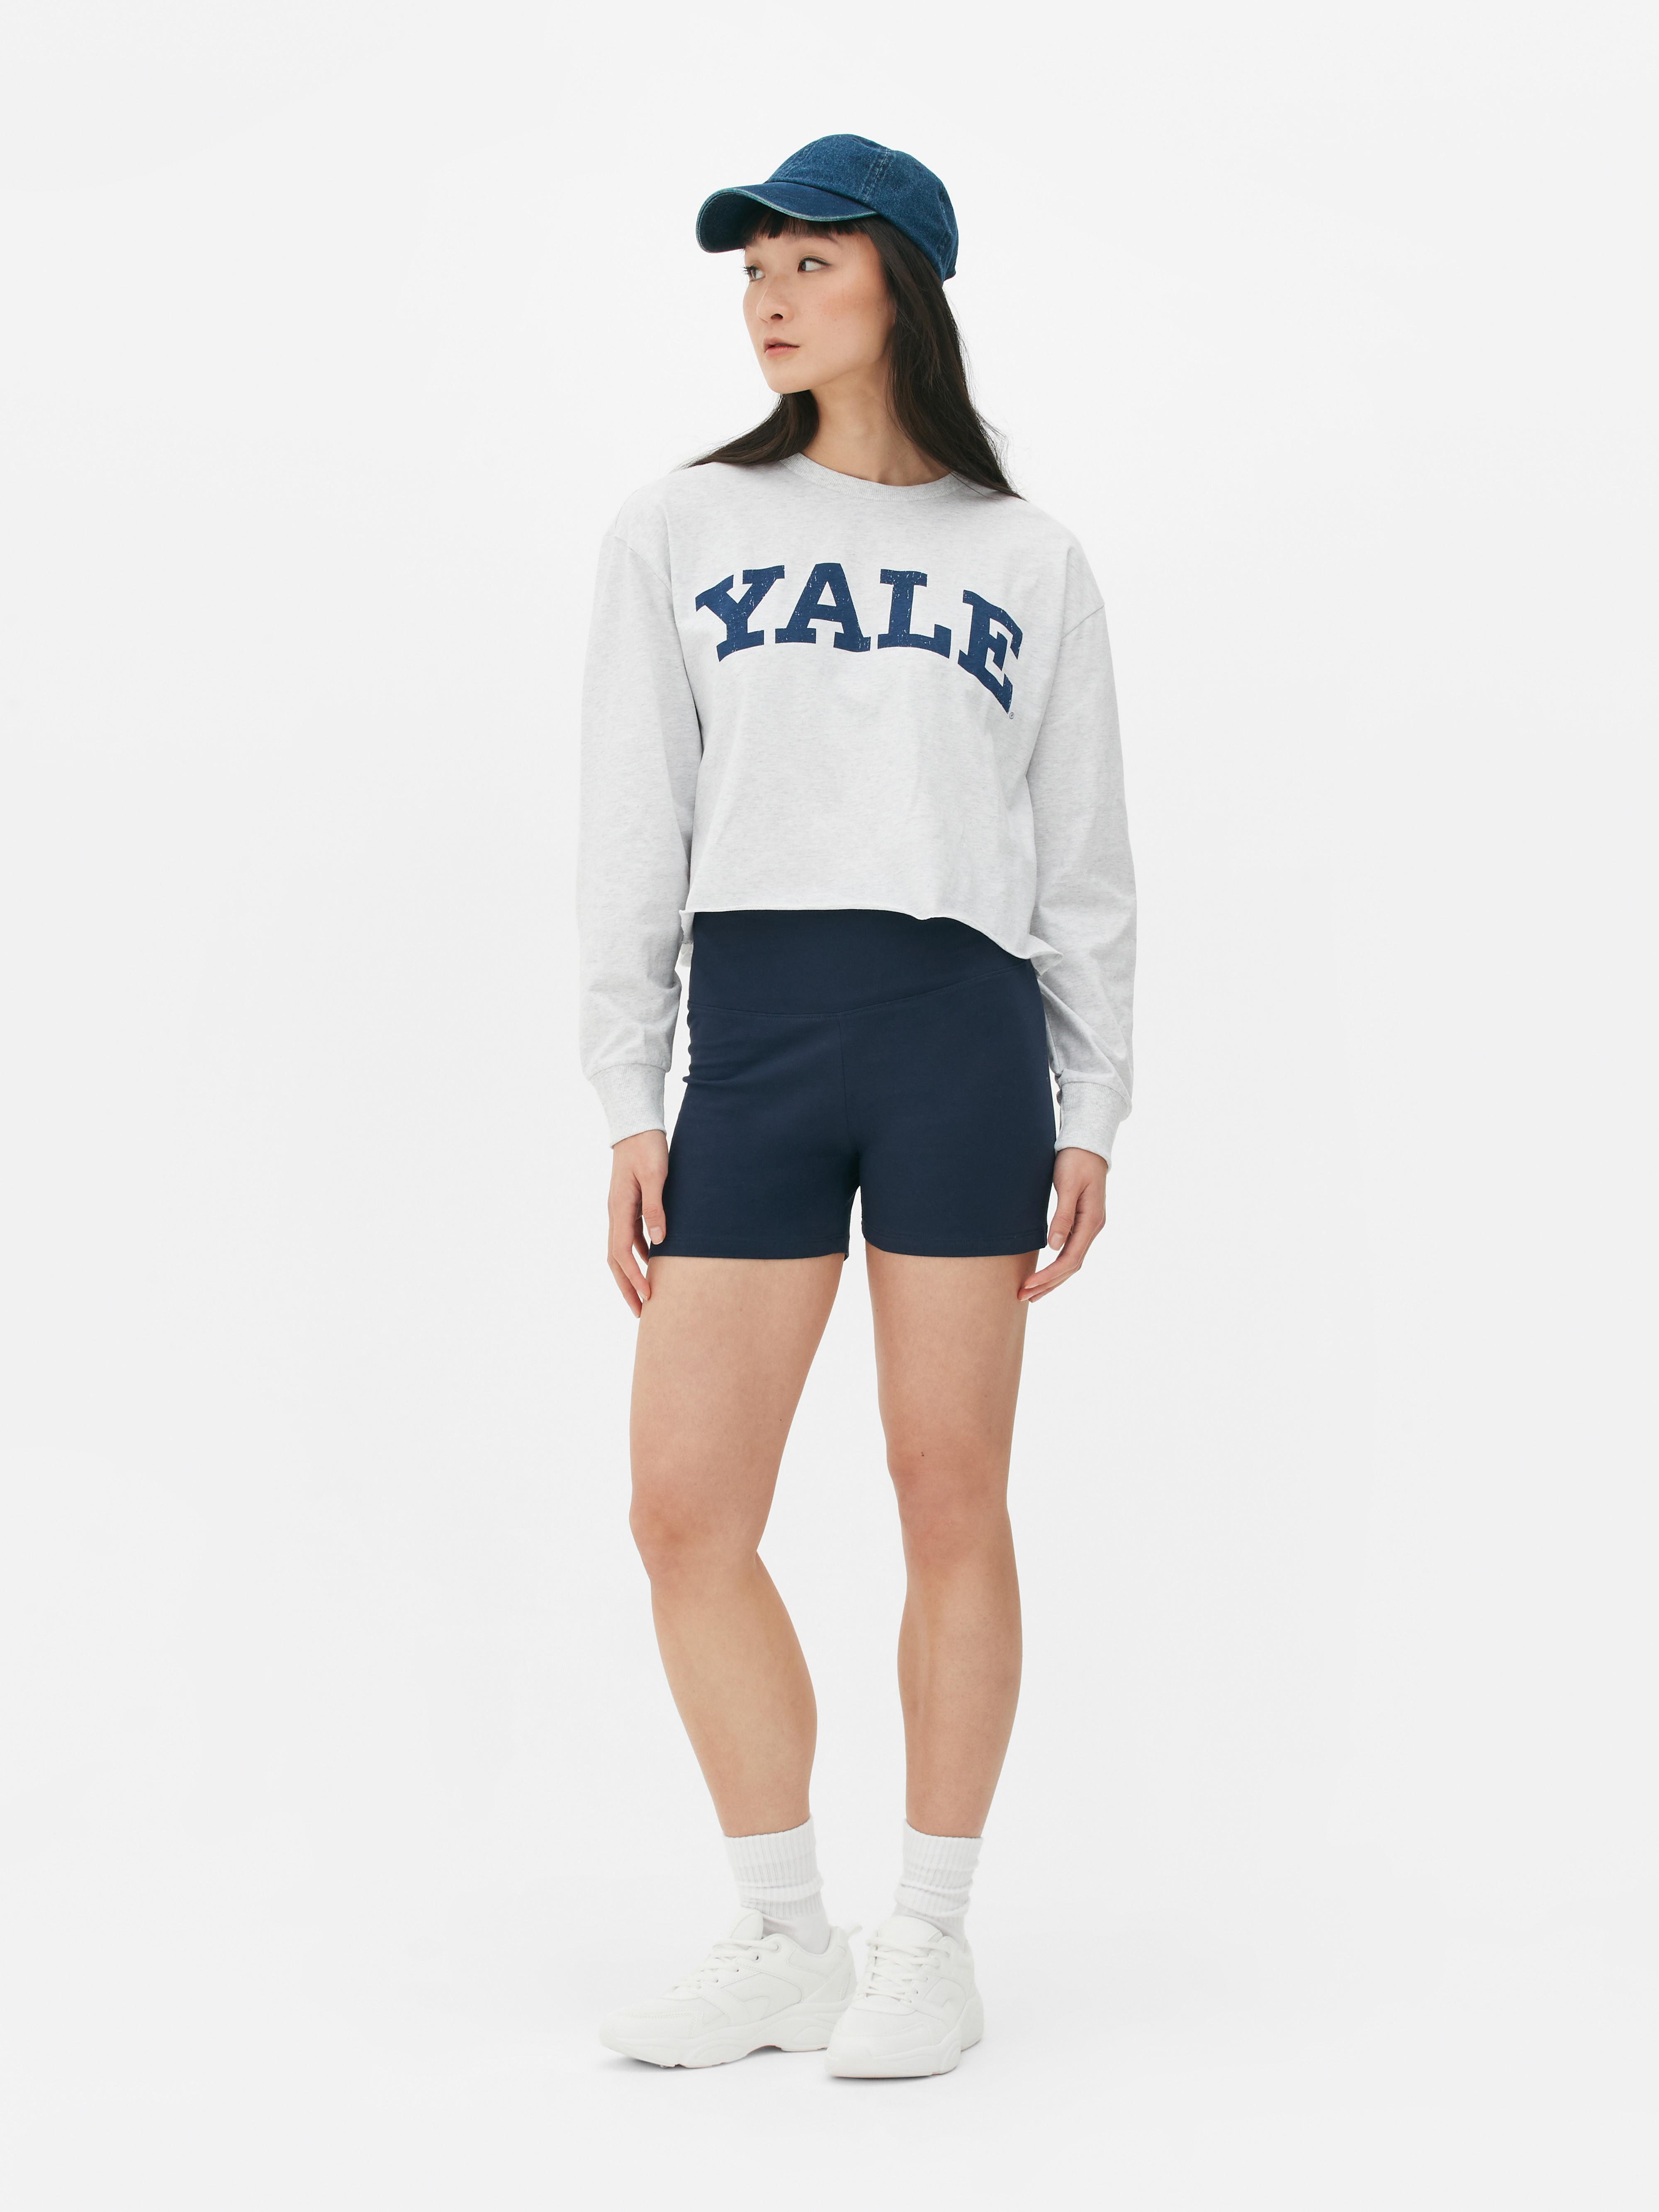 Yale Cropped Sweatshirt